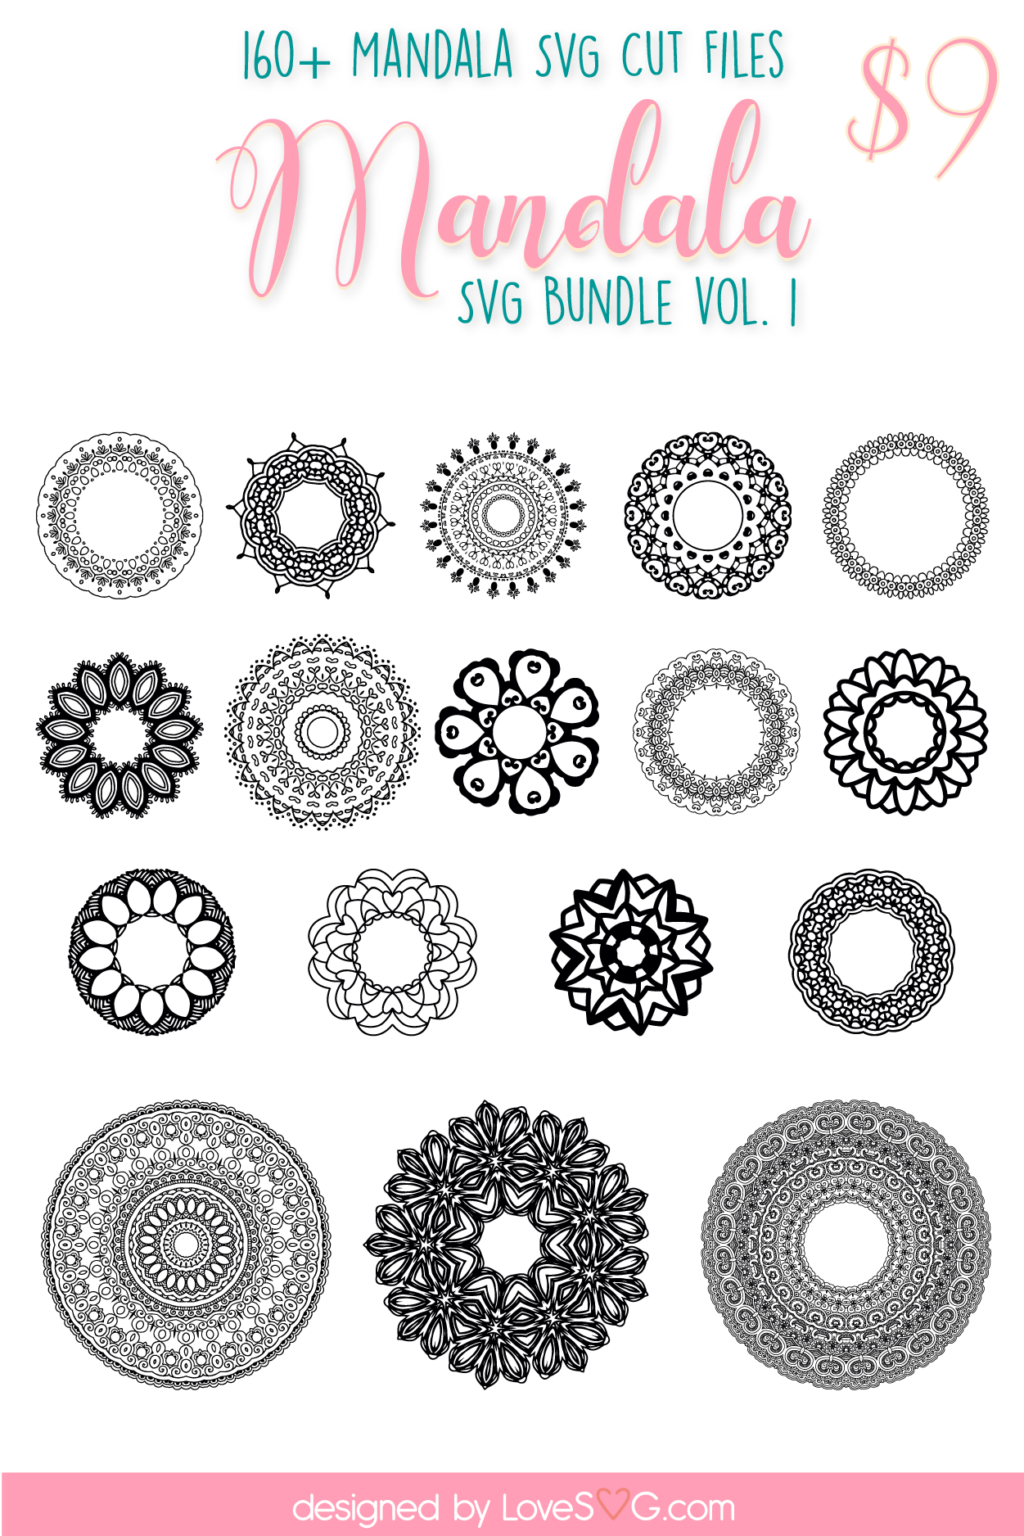 The Mandala SVG Bundle - Lovesvg.com